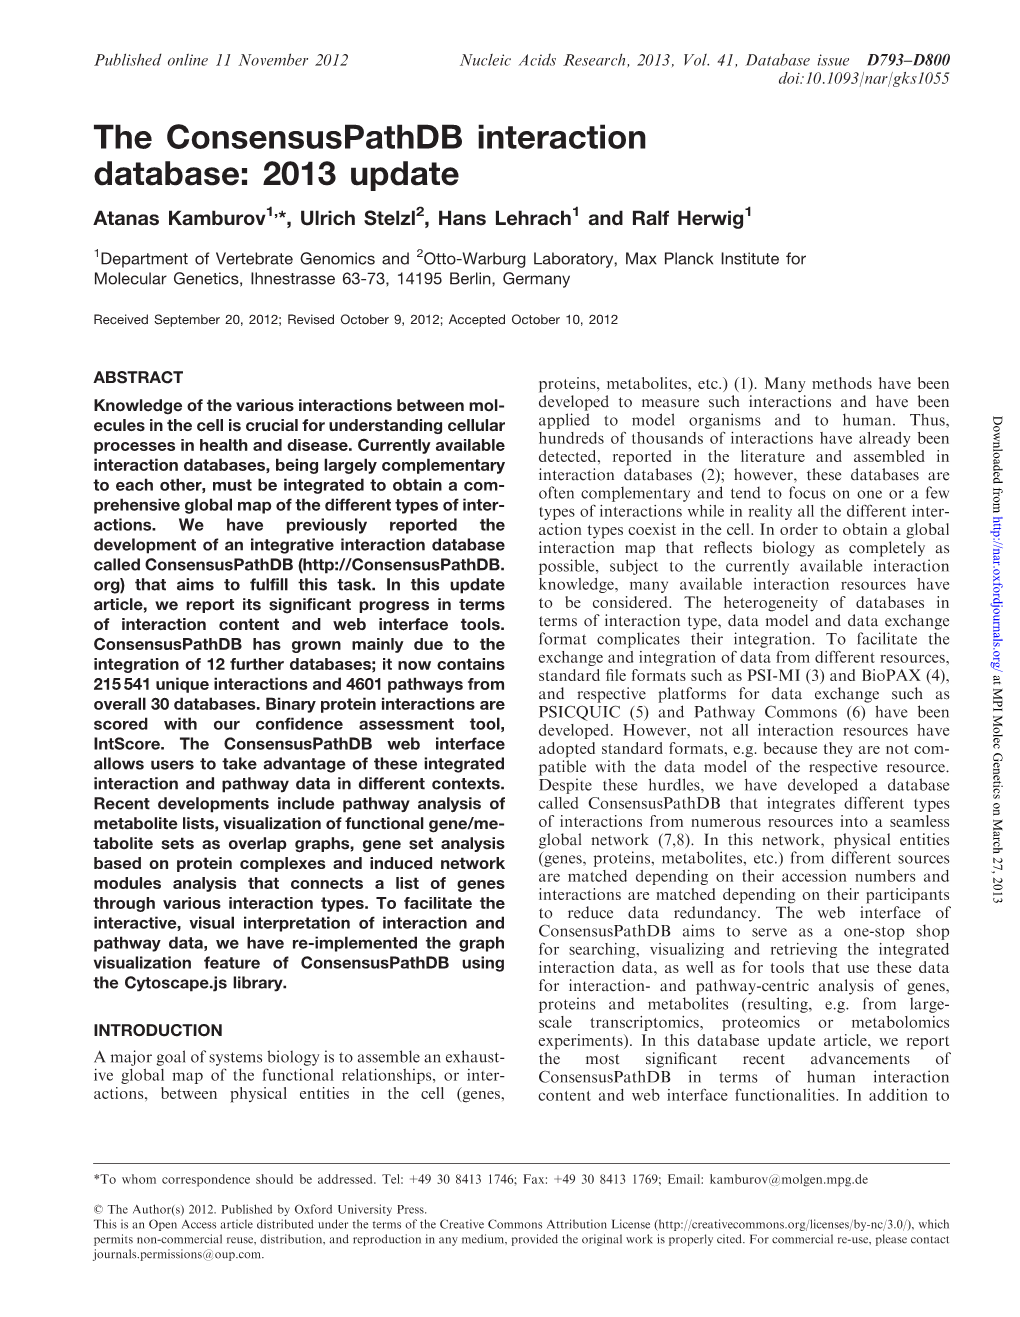 The Consensuspathdb Interaction Database: 2013 Update Atanas Kamburov1,*, Ulrich Stelzl2, Hans Lehrach1 and Ralf Herwig1